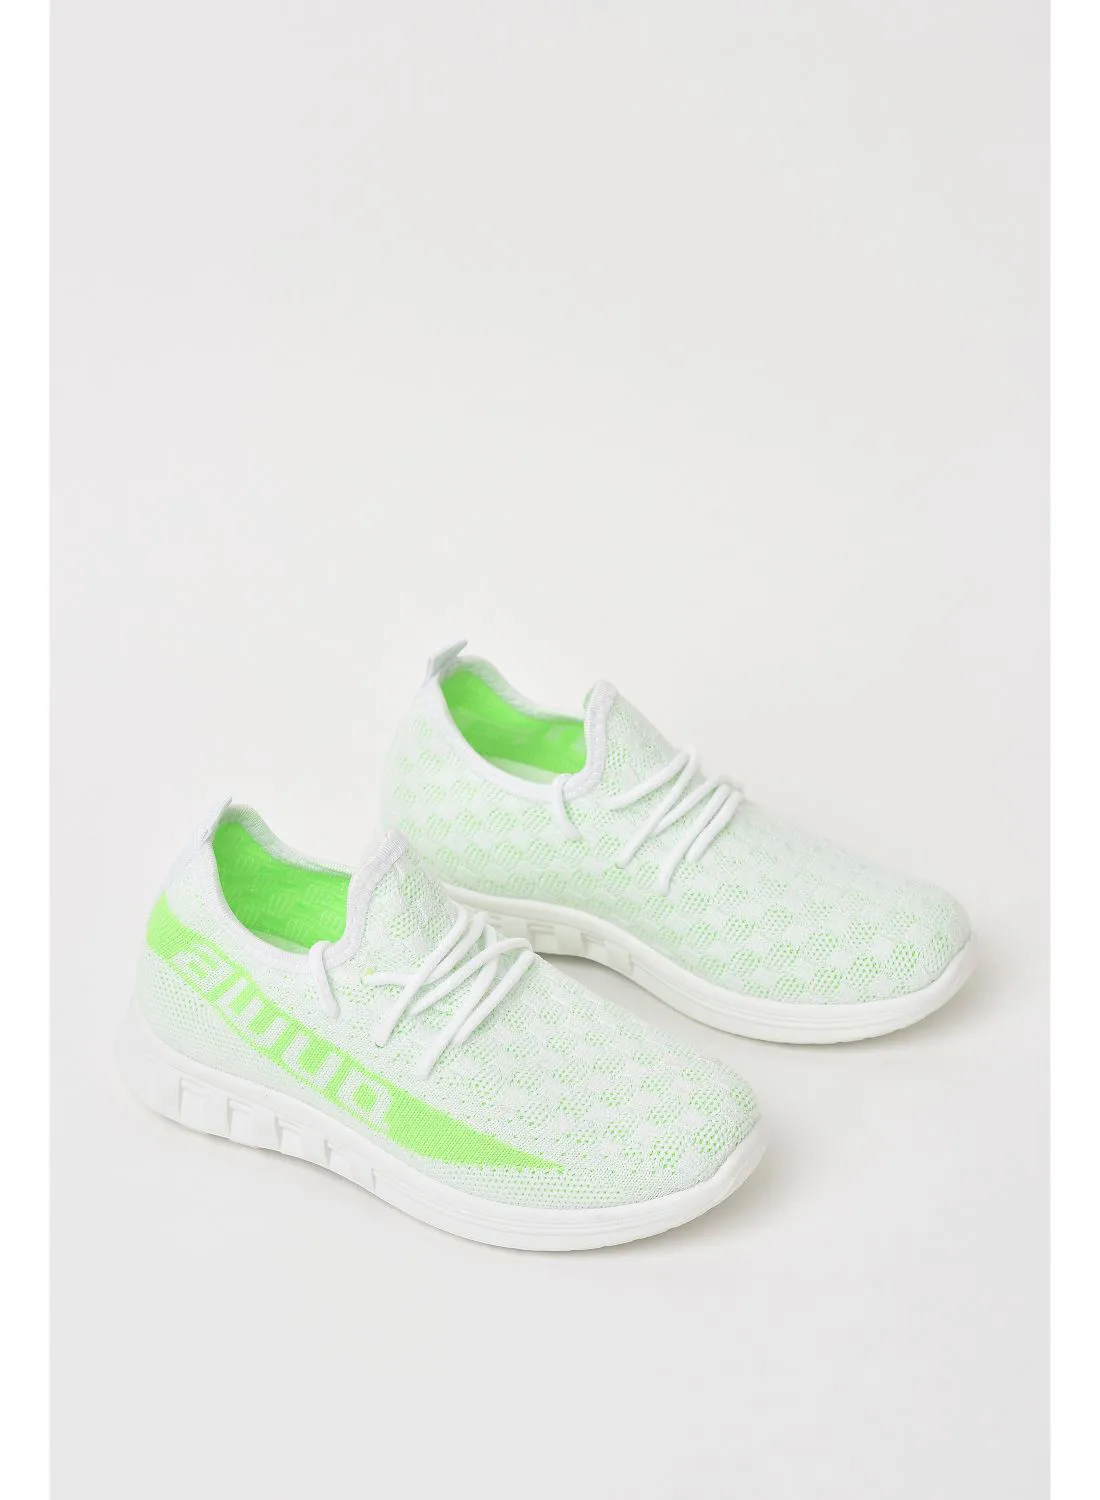 QUWA Casual Sneaker White/Green